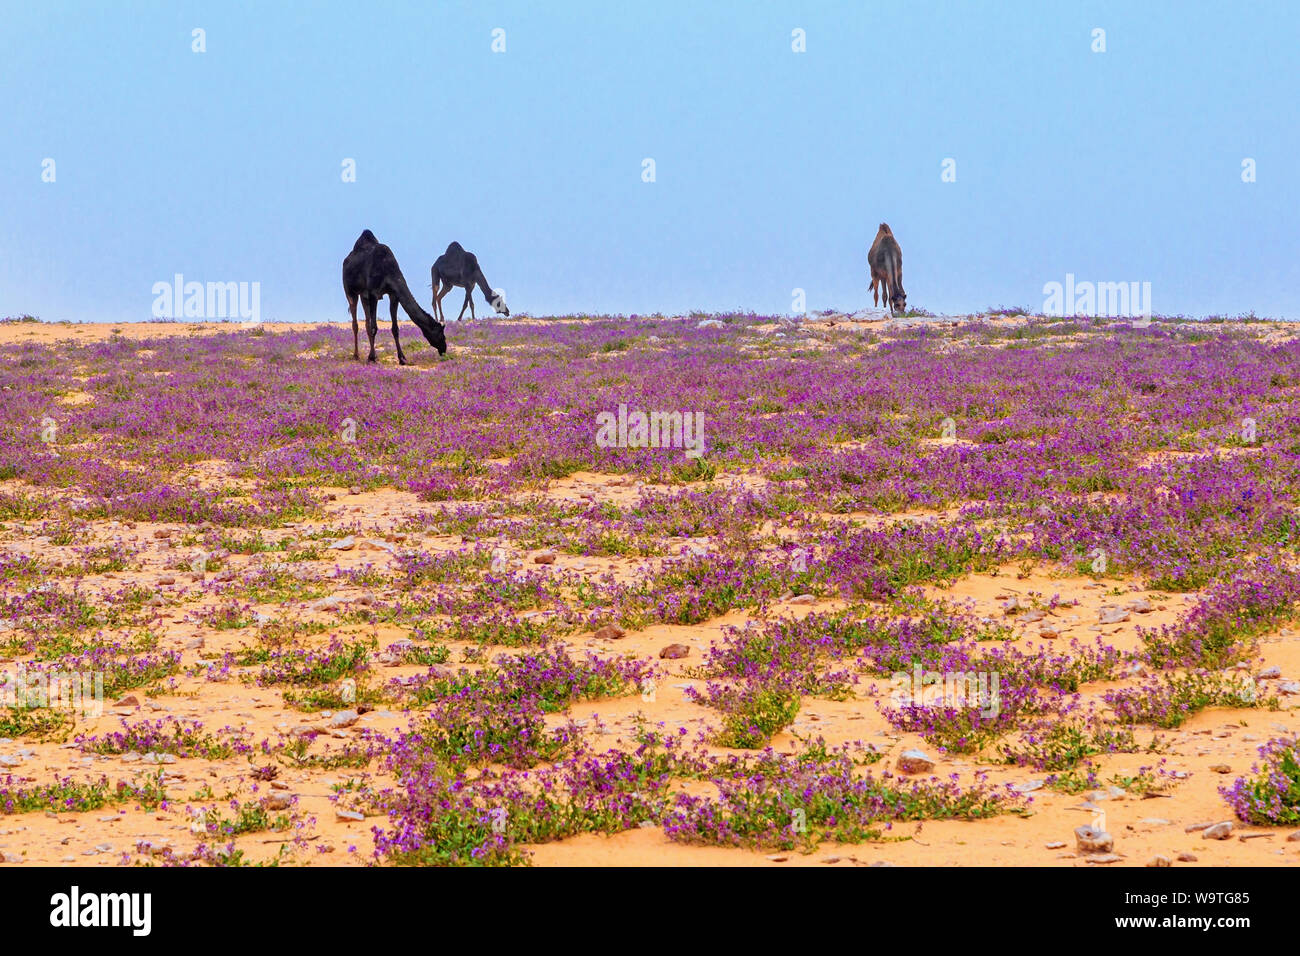 Drei Kamele Weiden in der Wüste, Riad, Saudi-Arabien Stockfoto